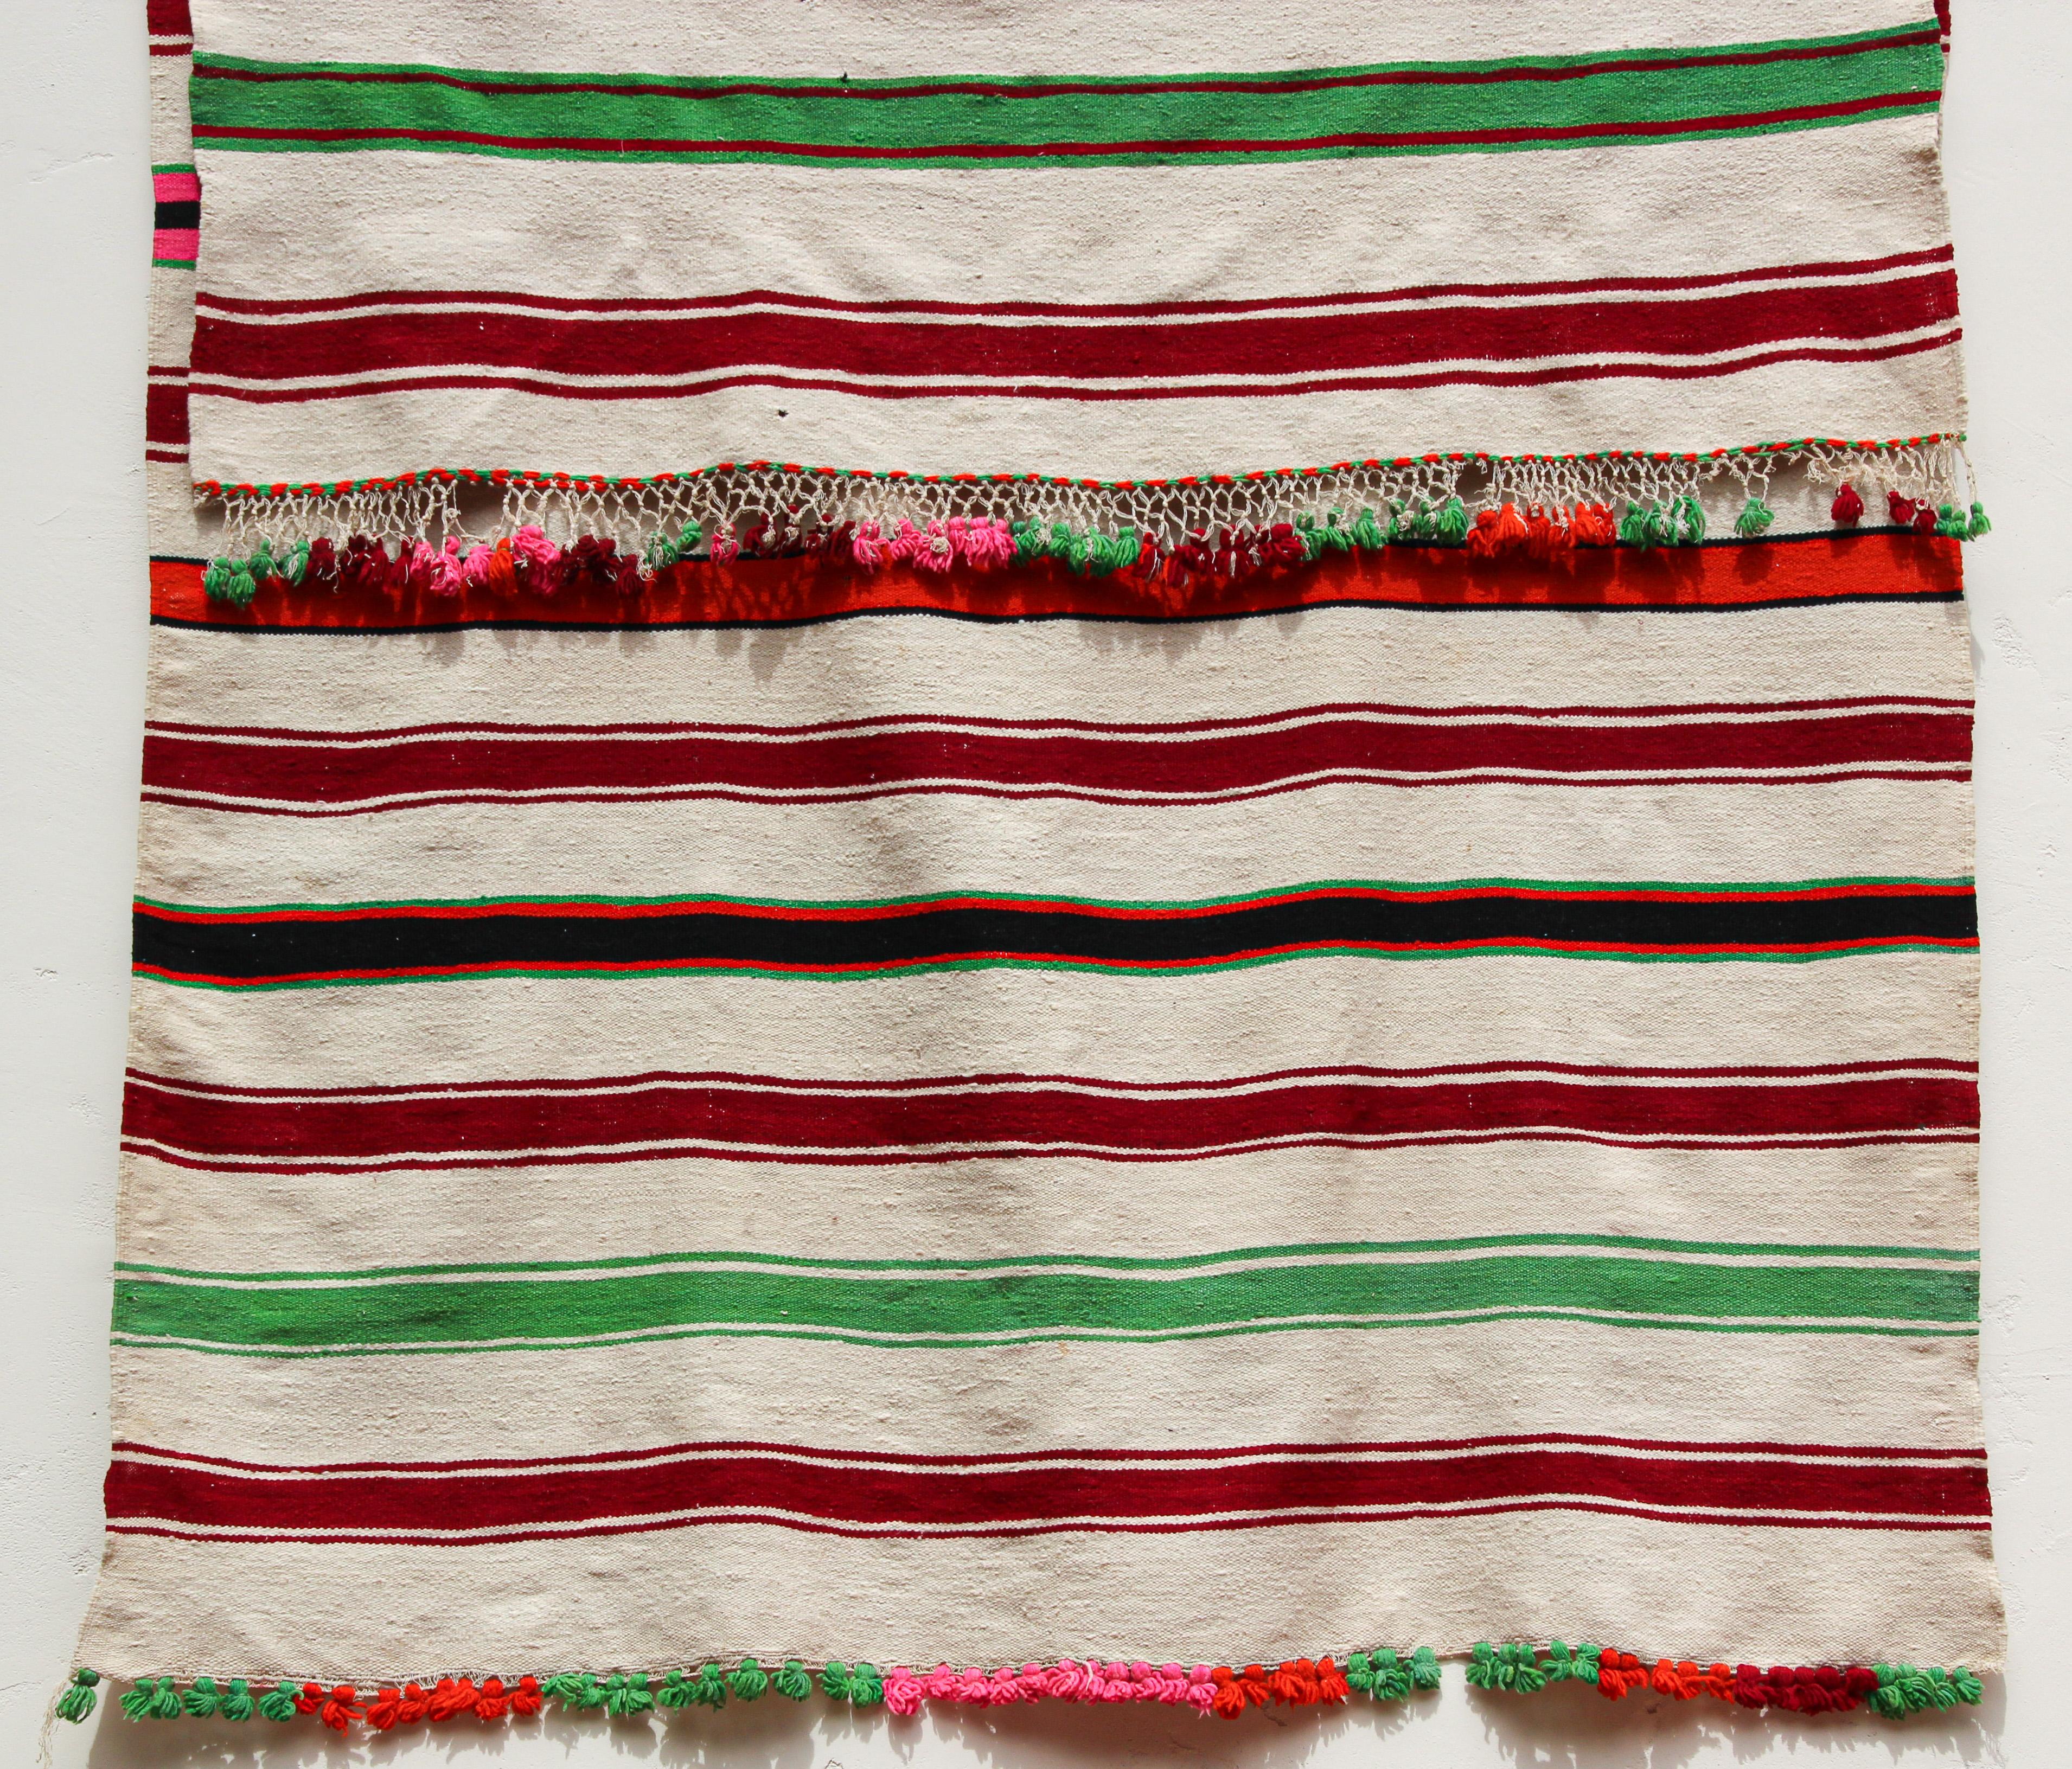 Vintage 1960s Moroccan Flat-Weave Rug, Ethnic Textile Handira For Sale 6